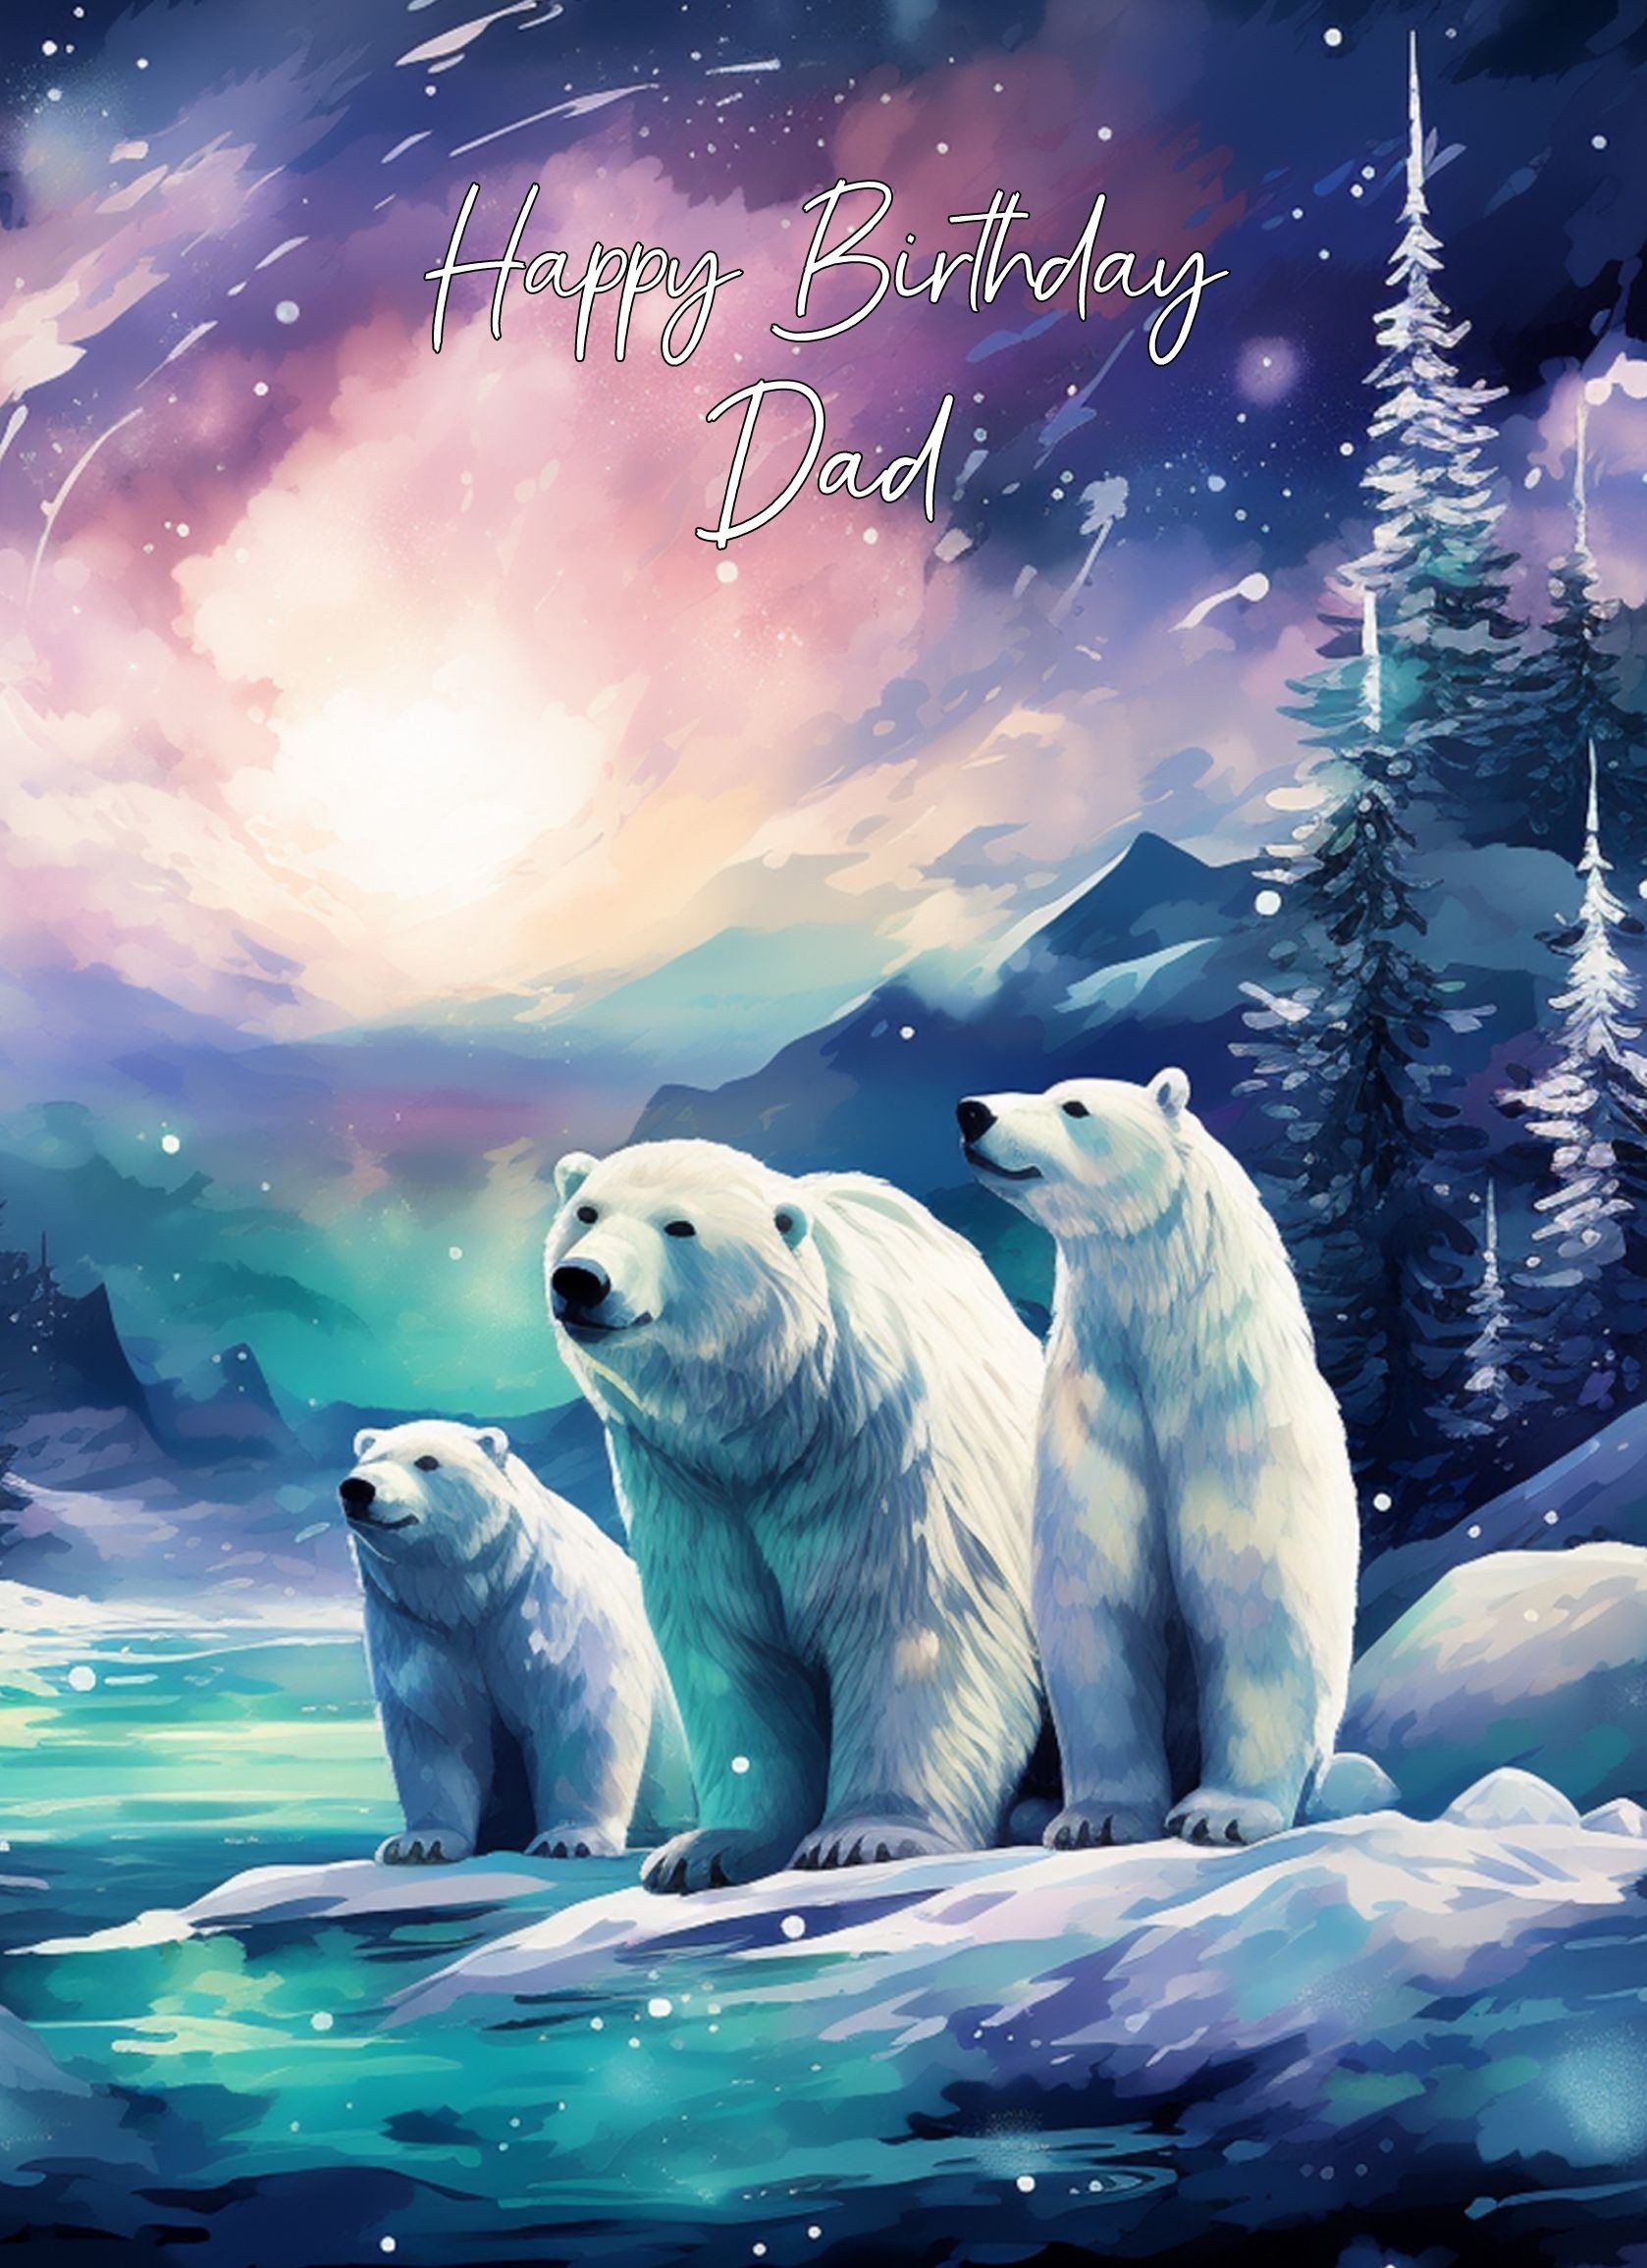 Polar Bear Art Birthday Card For Dad (Design 1)